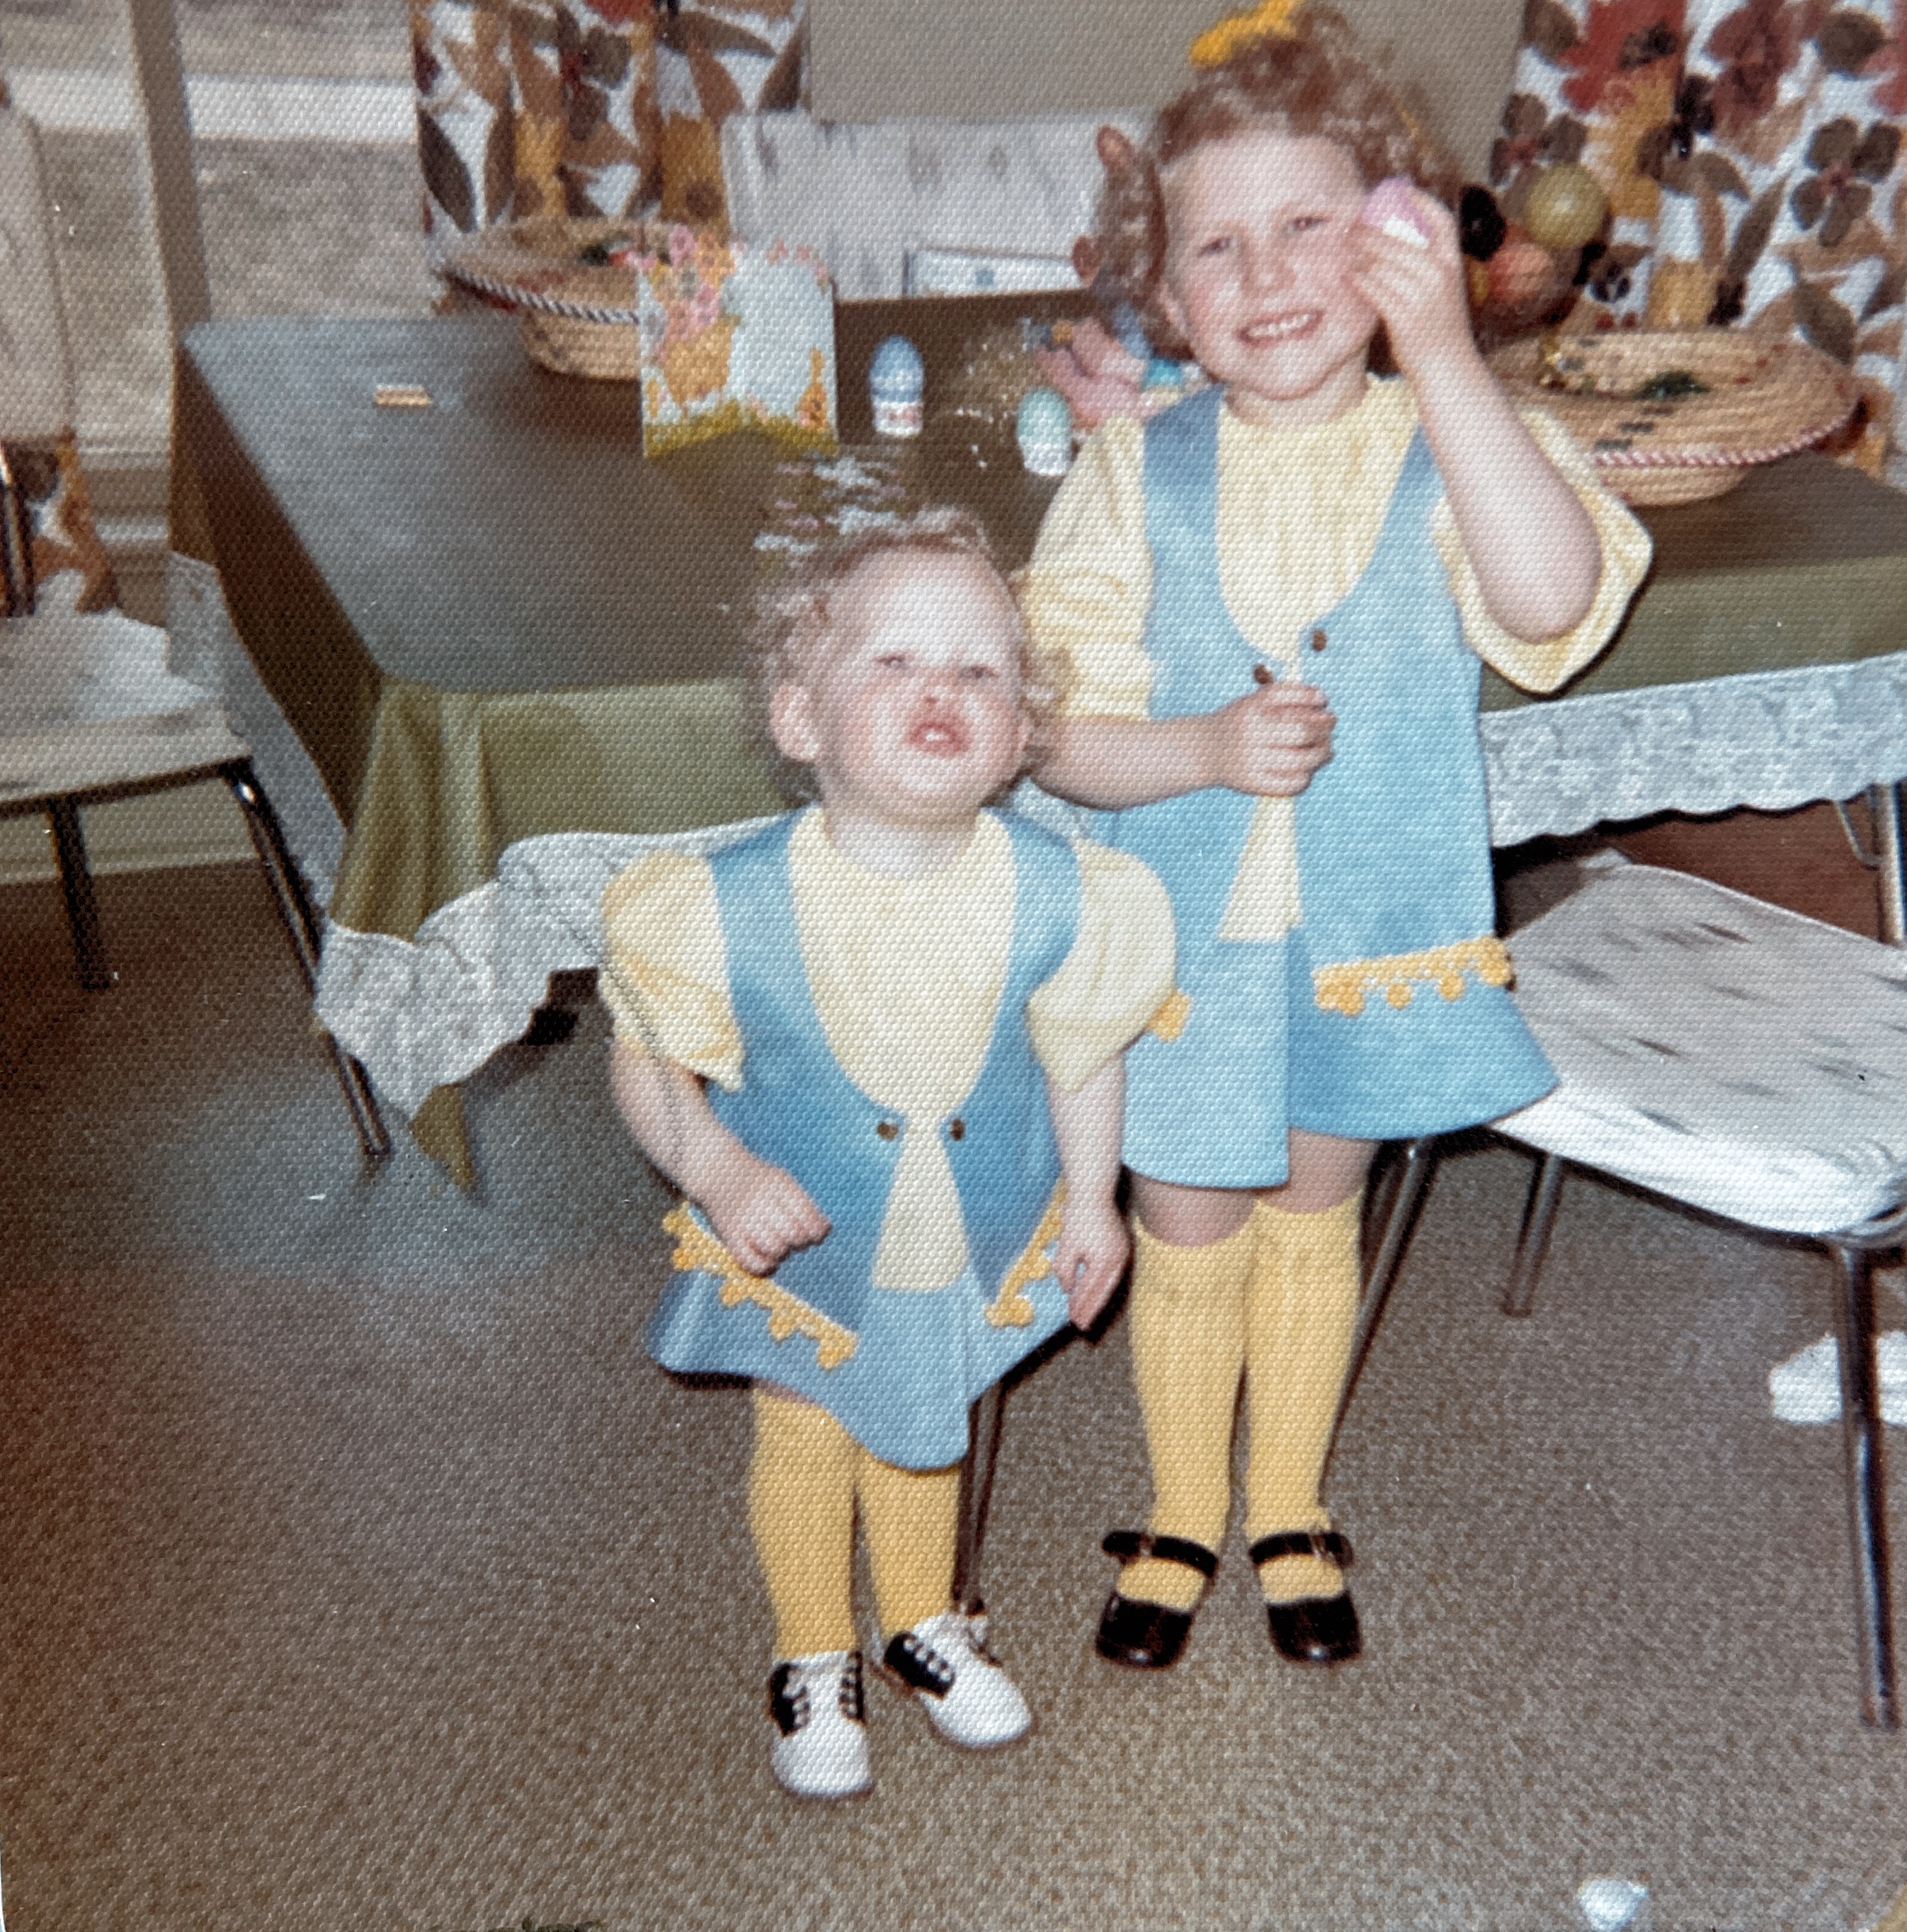 Kathie and Julie. Easter 1972